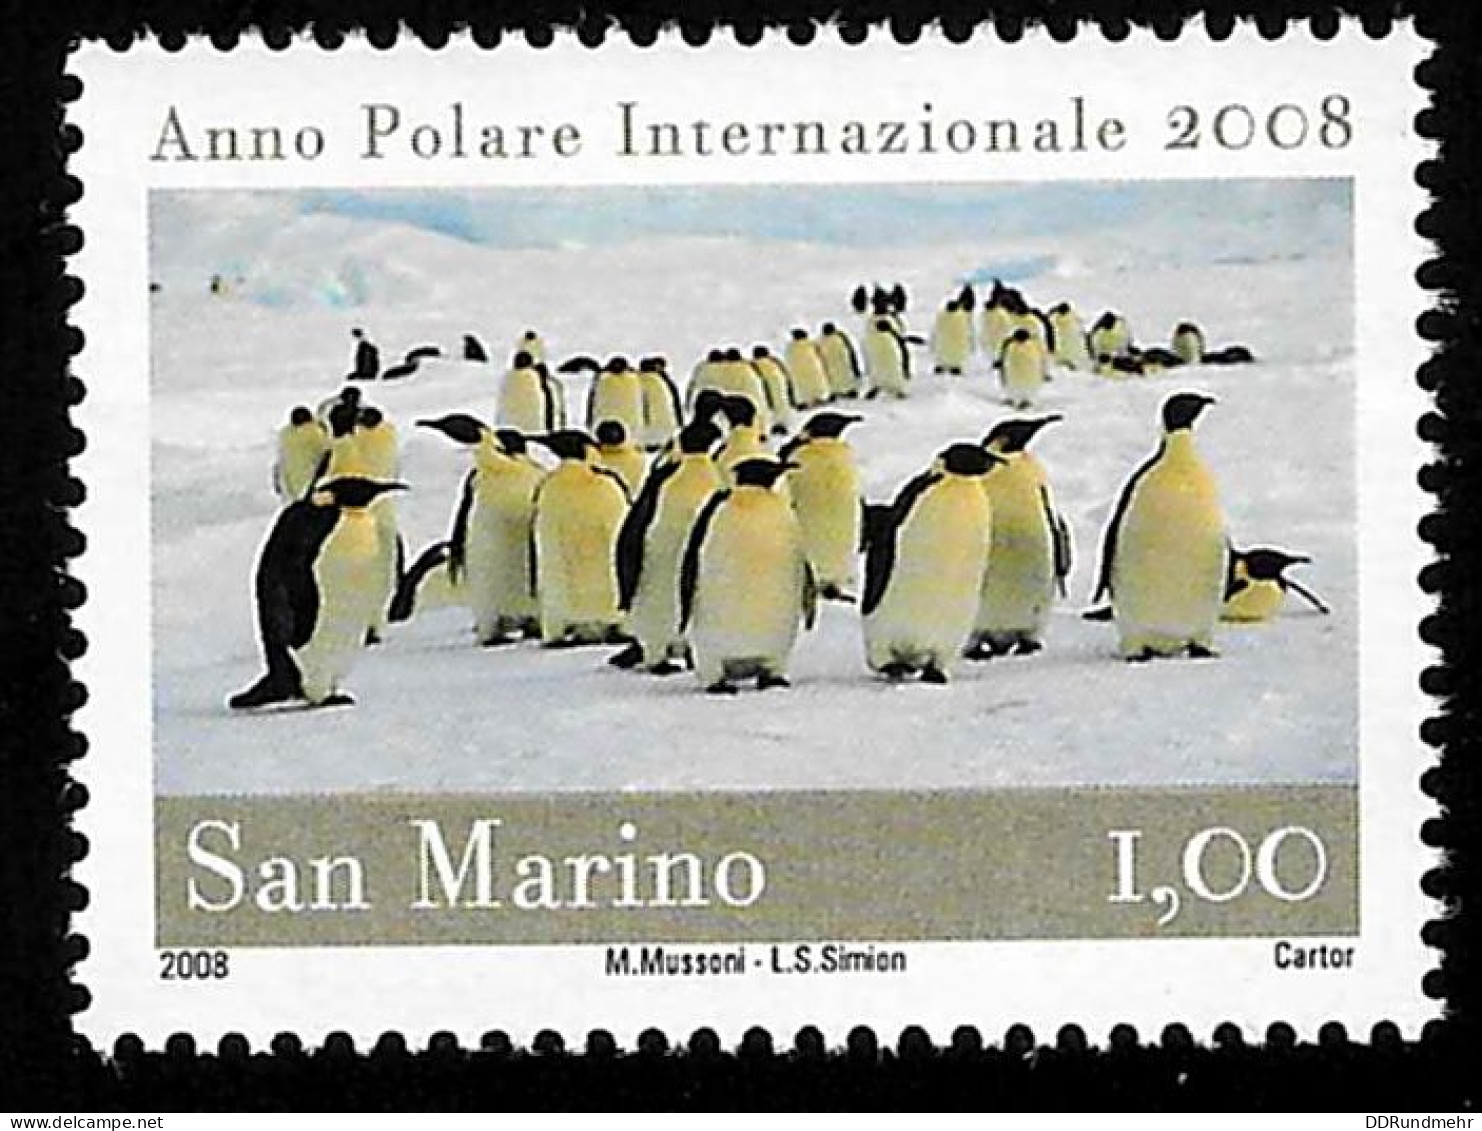 2008 Polar Year Michel SM 2359 Stamp Number SM 1769 Yvert Et Tellier SM 2152 Stanley Gibbons SM 2185 Xx MNH - Ongebruikt